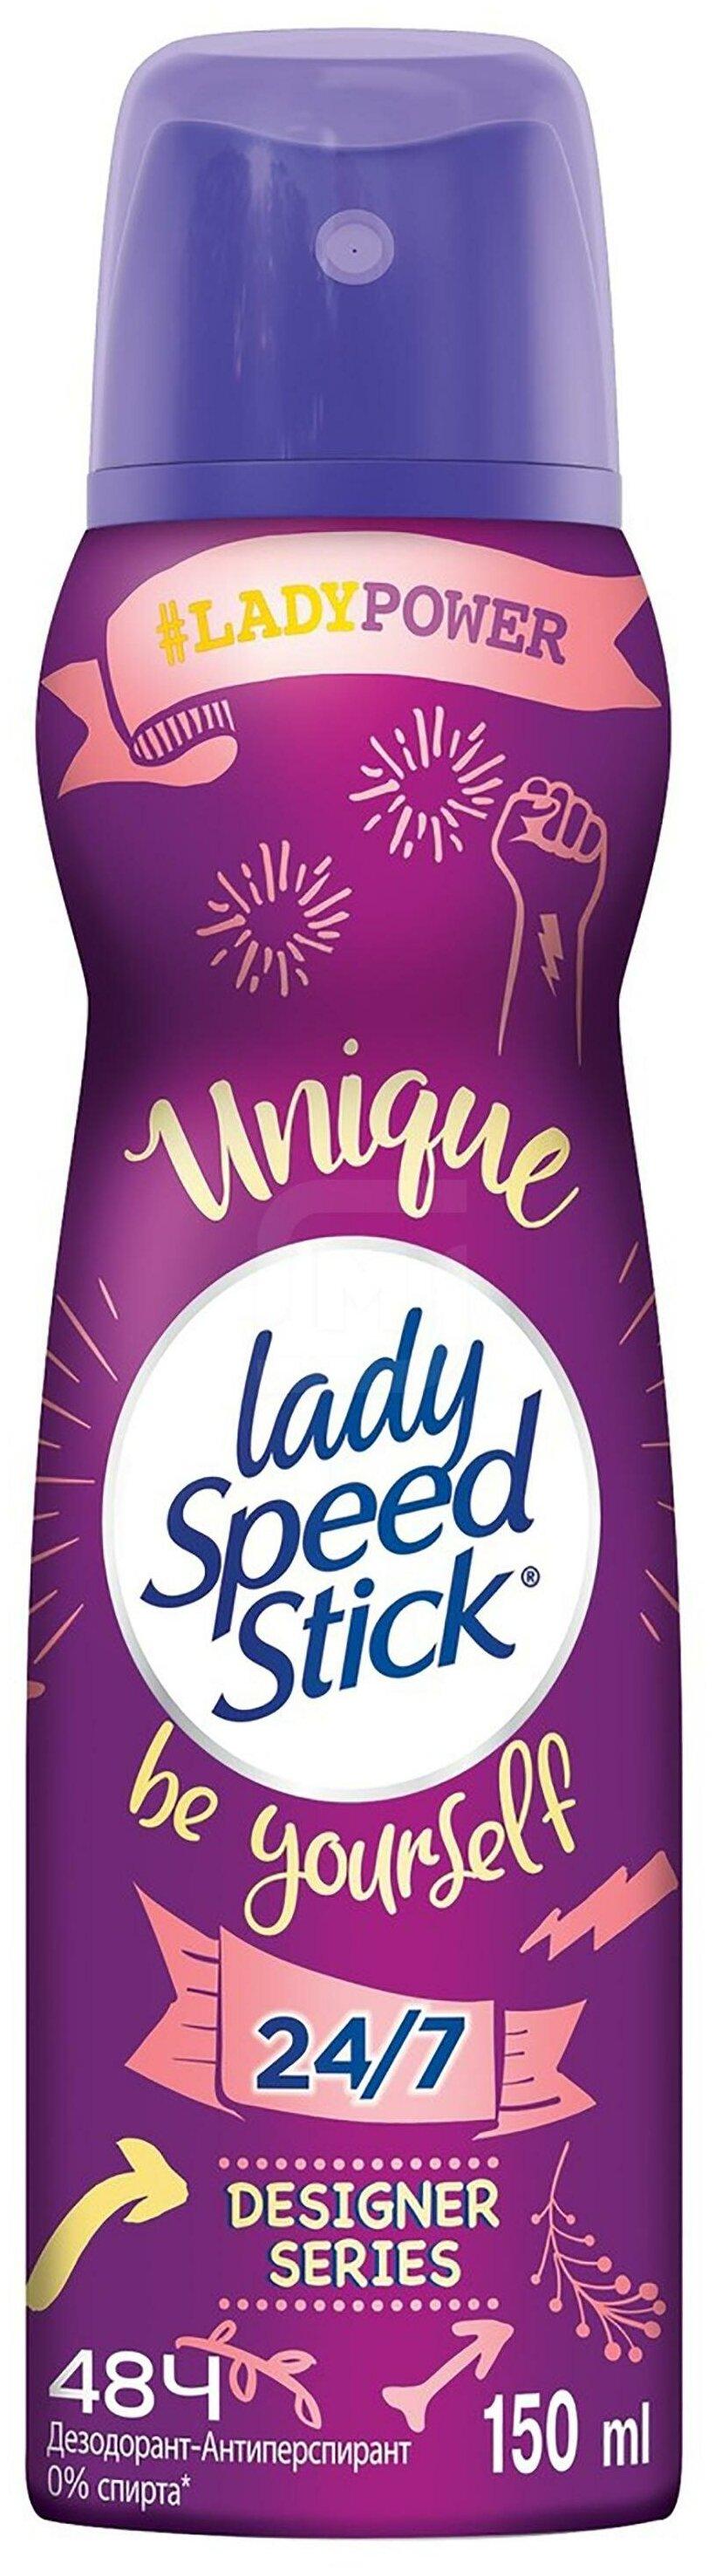 Дезодорант Lady Speed Stick спрей Unique																														, 150 мл., баллон